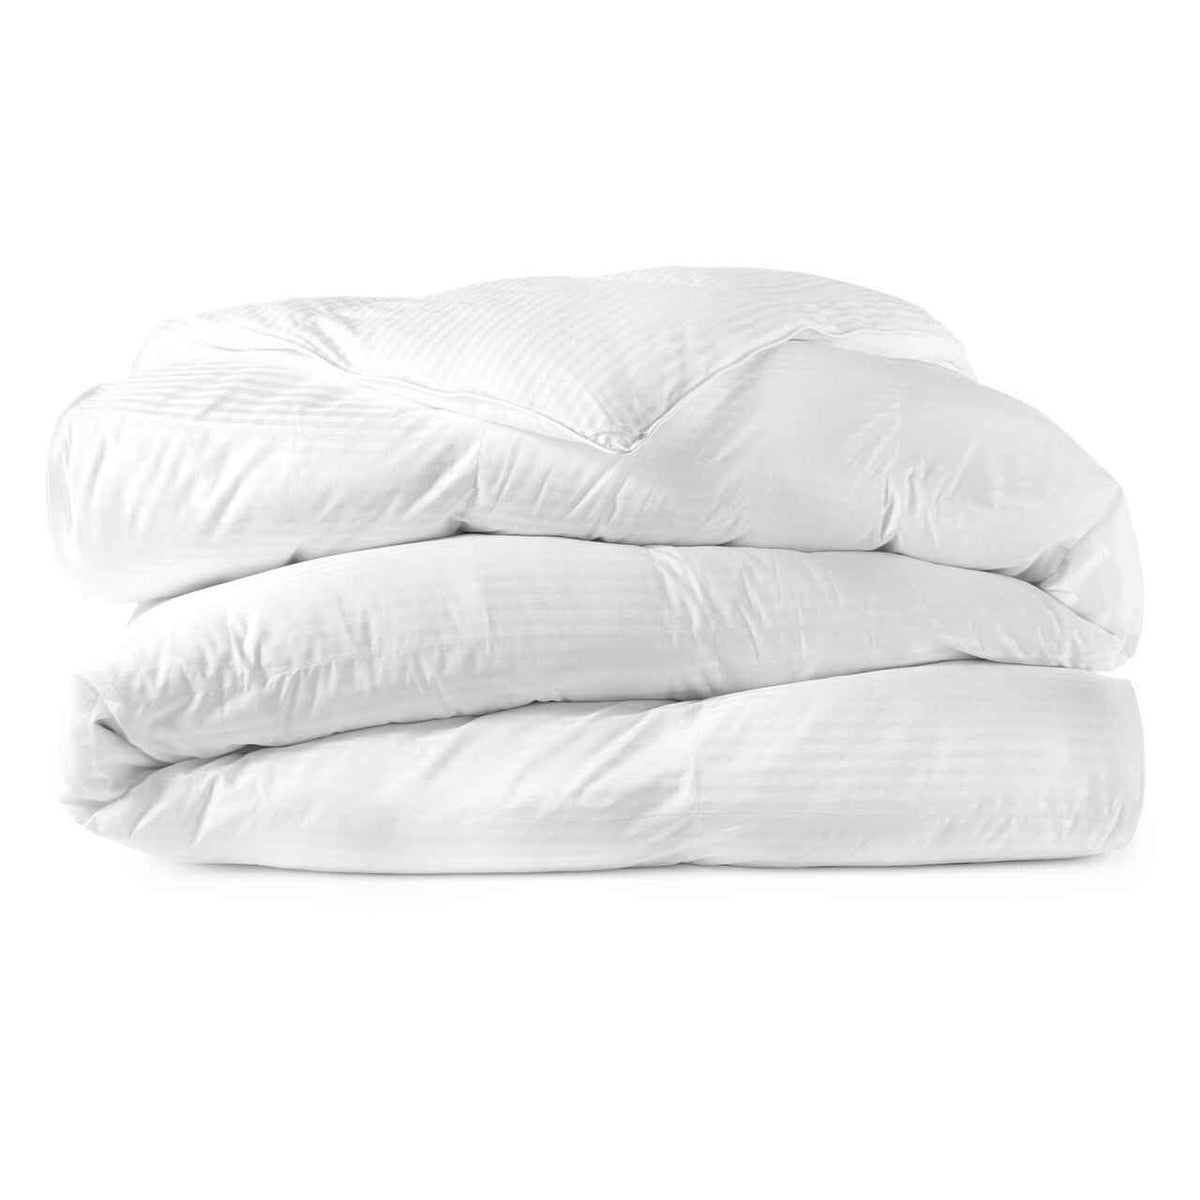 World’s Biggest Comforter - 10' x 10' Colossal All Season Down Alternative Comforter with Duvet Tabs (Hypoallergenic) - beddingbag.com